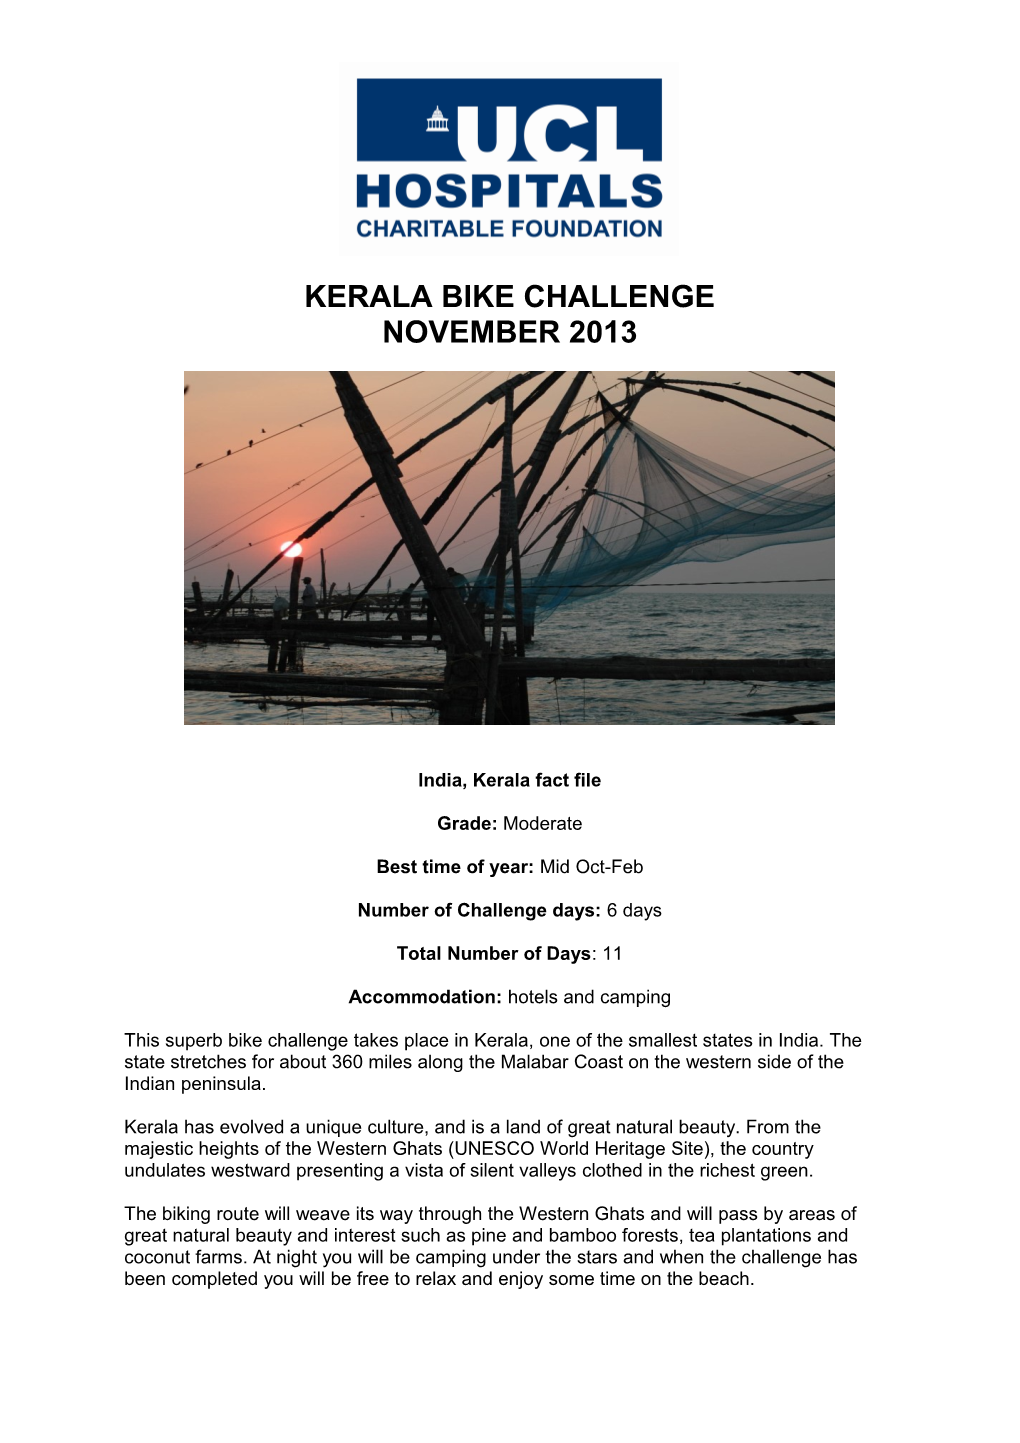 Kerala Bike Challenge 2013 Information Sheet